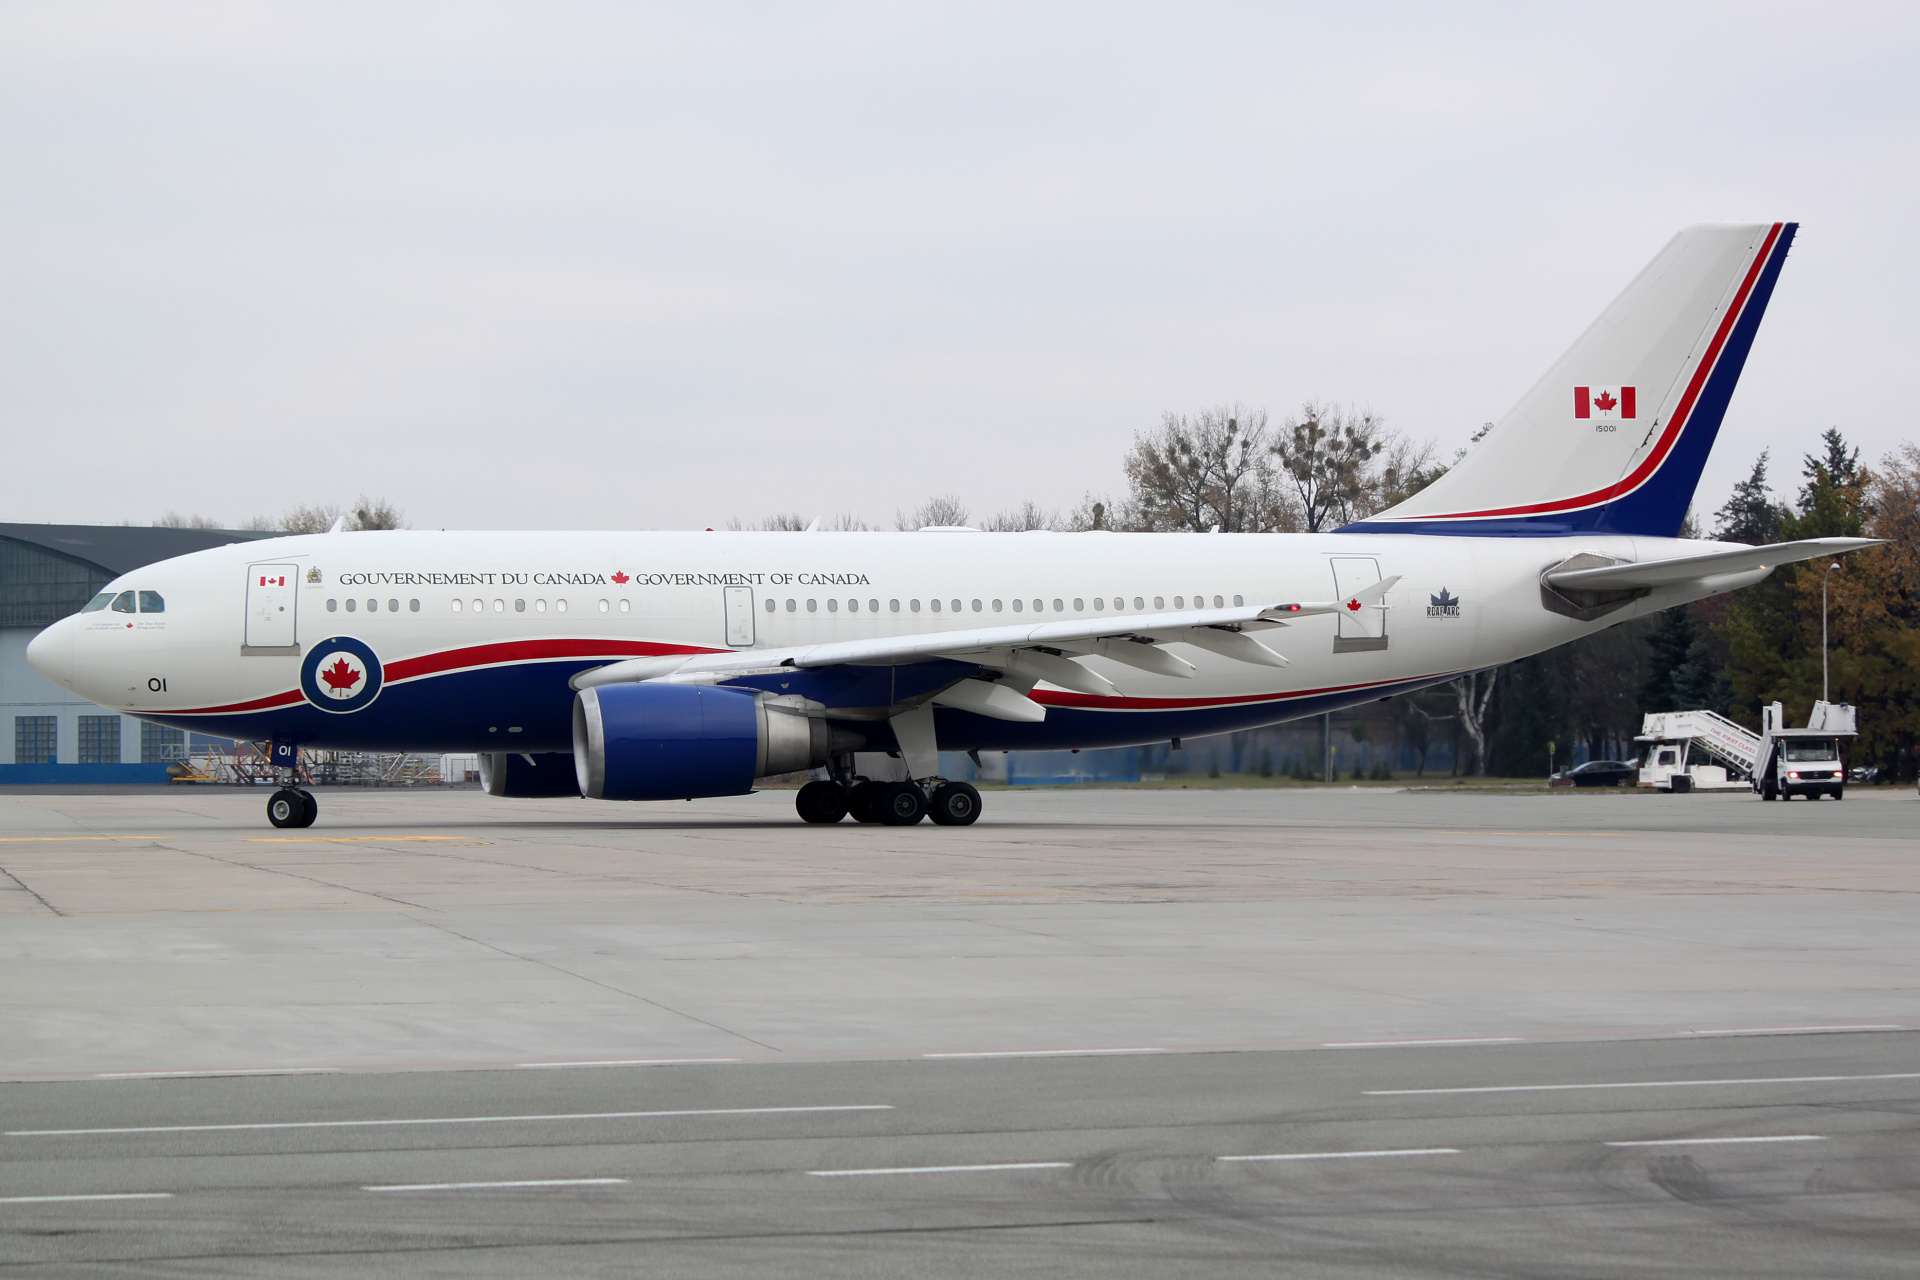 CC-150 Polaris, 15001, Canadian Air Force (Aircraft » EPWA Spotting » Airbus A310-300)